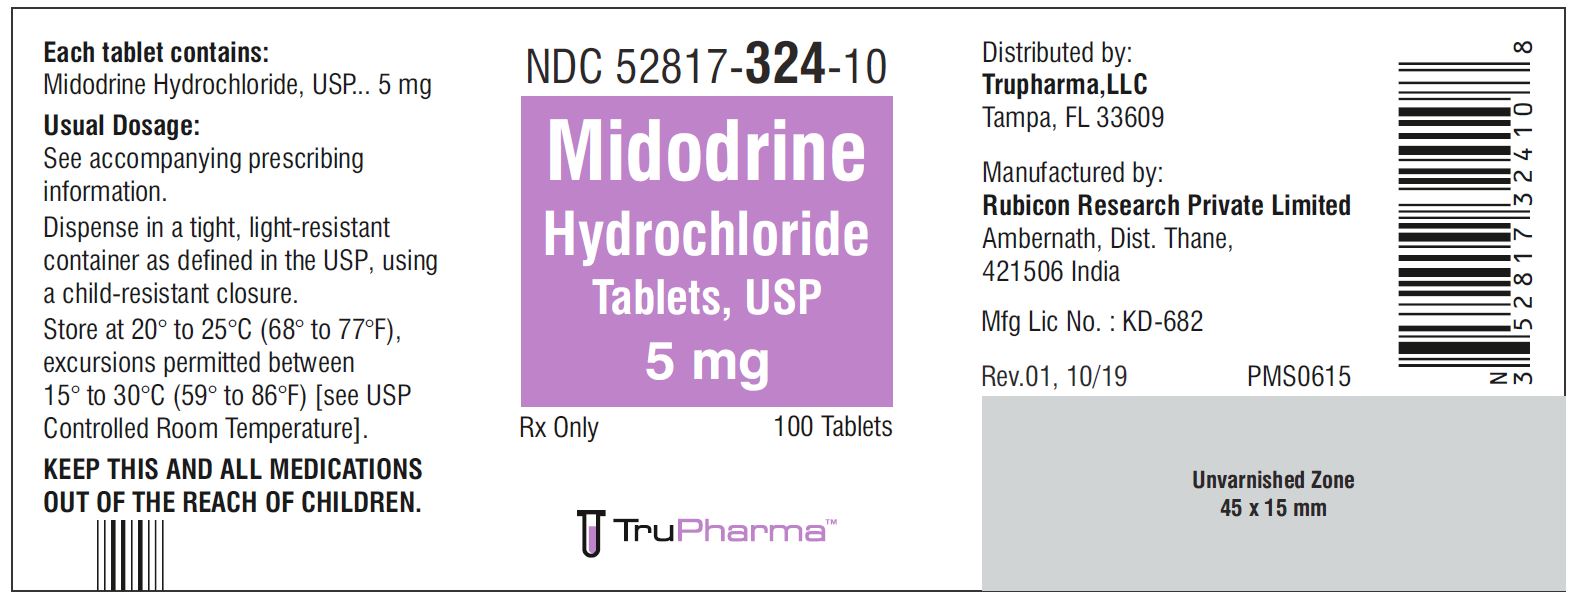 Midodrine Hydrochloride Tablets, USP 5mg - 100 Tablets - NDC 52817-324-10